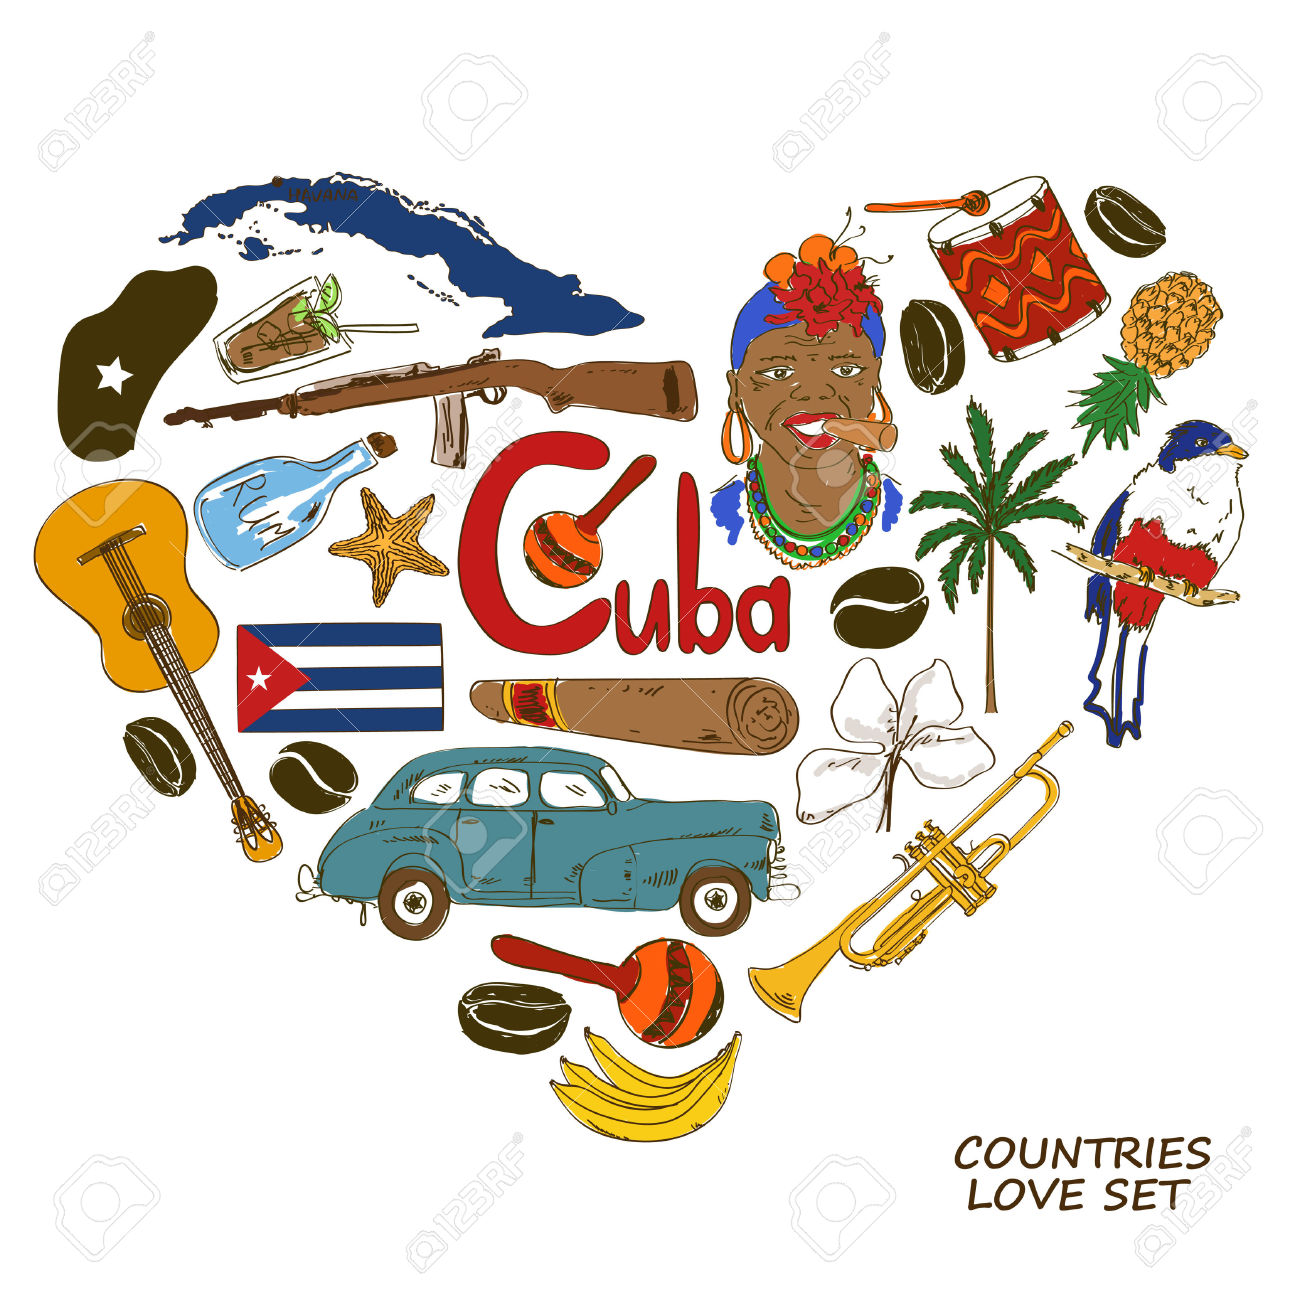 Cuba clipart #13, Download drawings